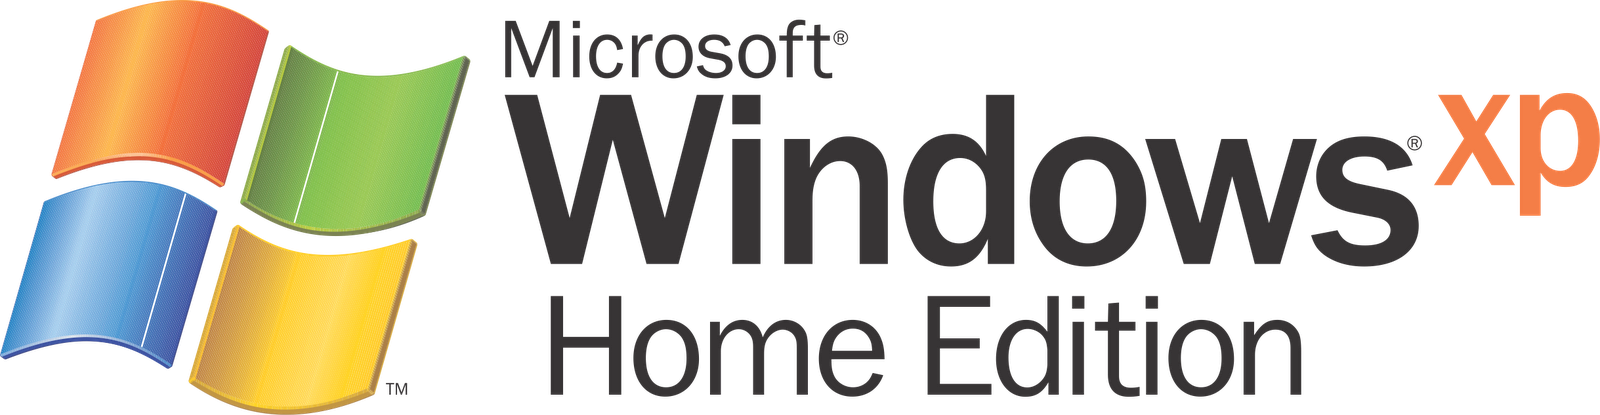 Windows Home Crack Edition Xp - Windows Xp Clipart (1600x415), Png Download